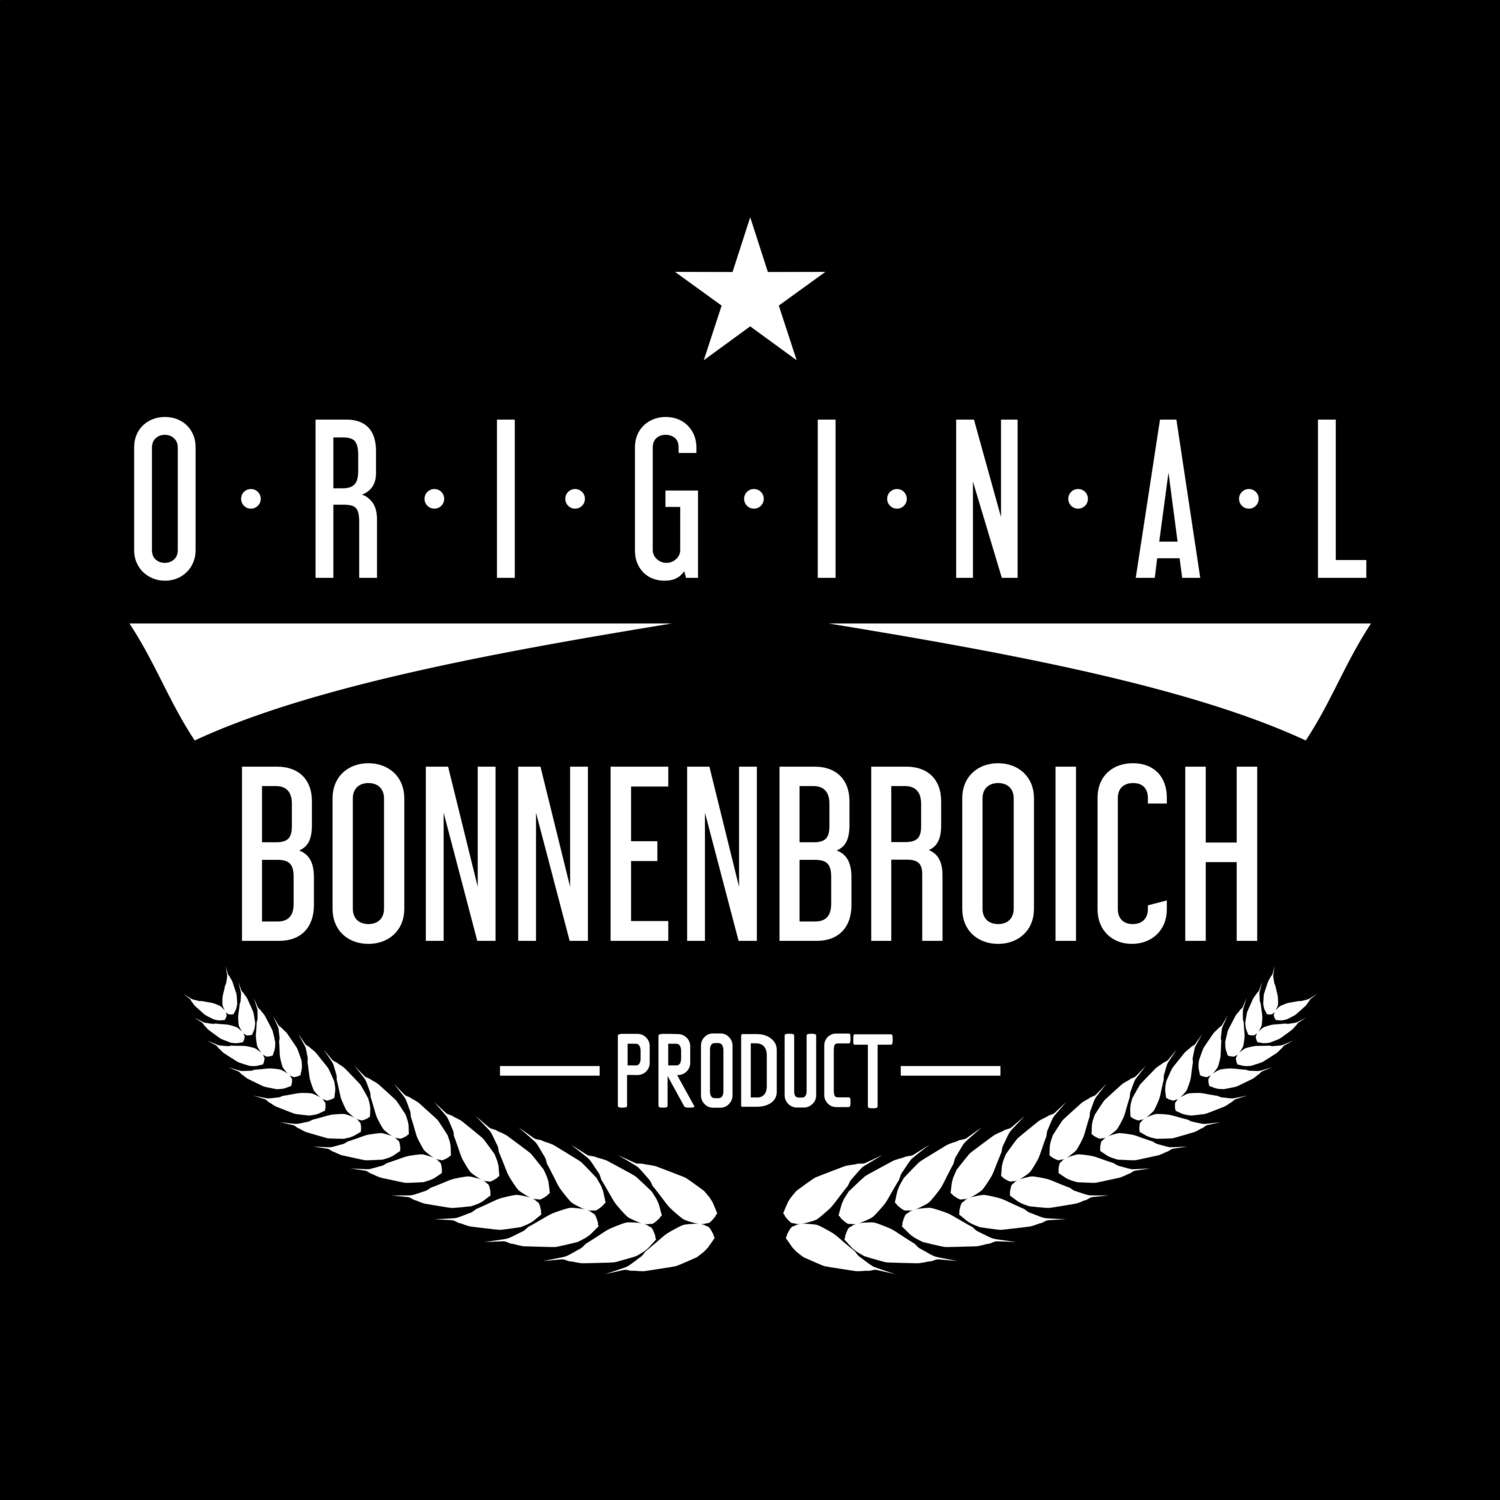 Bonnenbroich T-Shirt »Original Product«